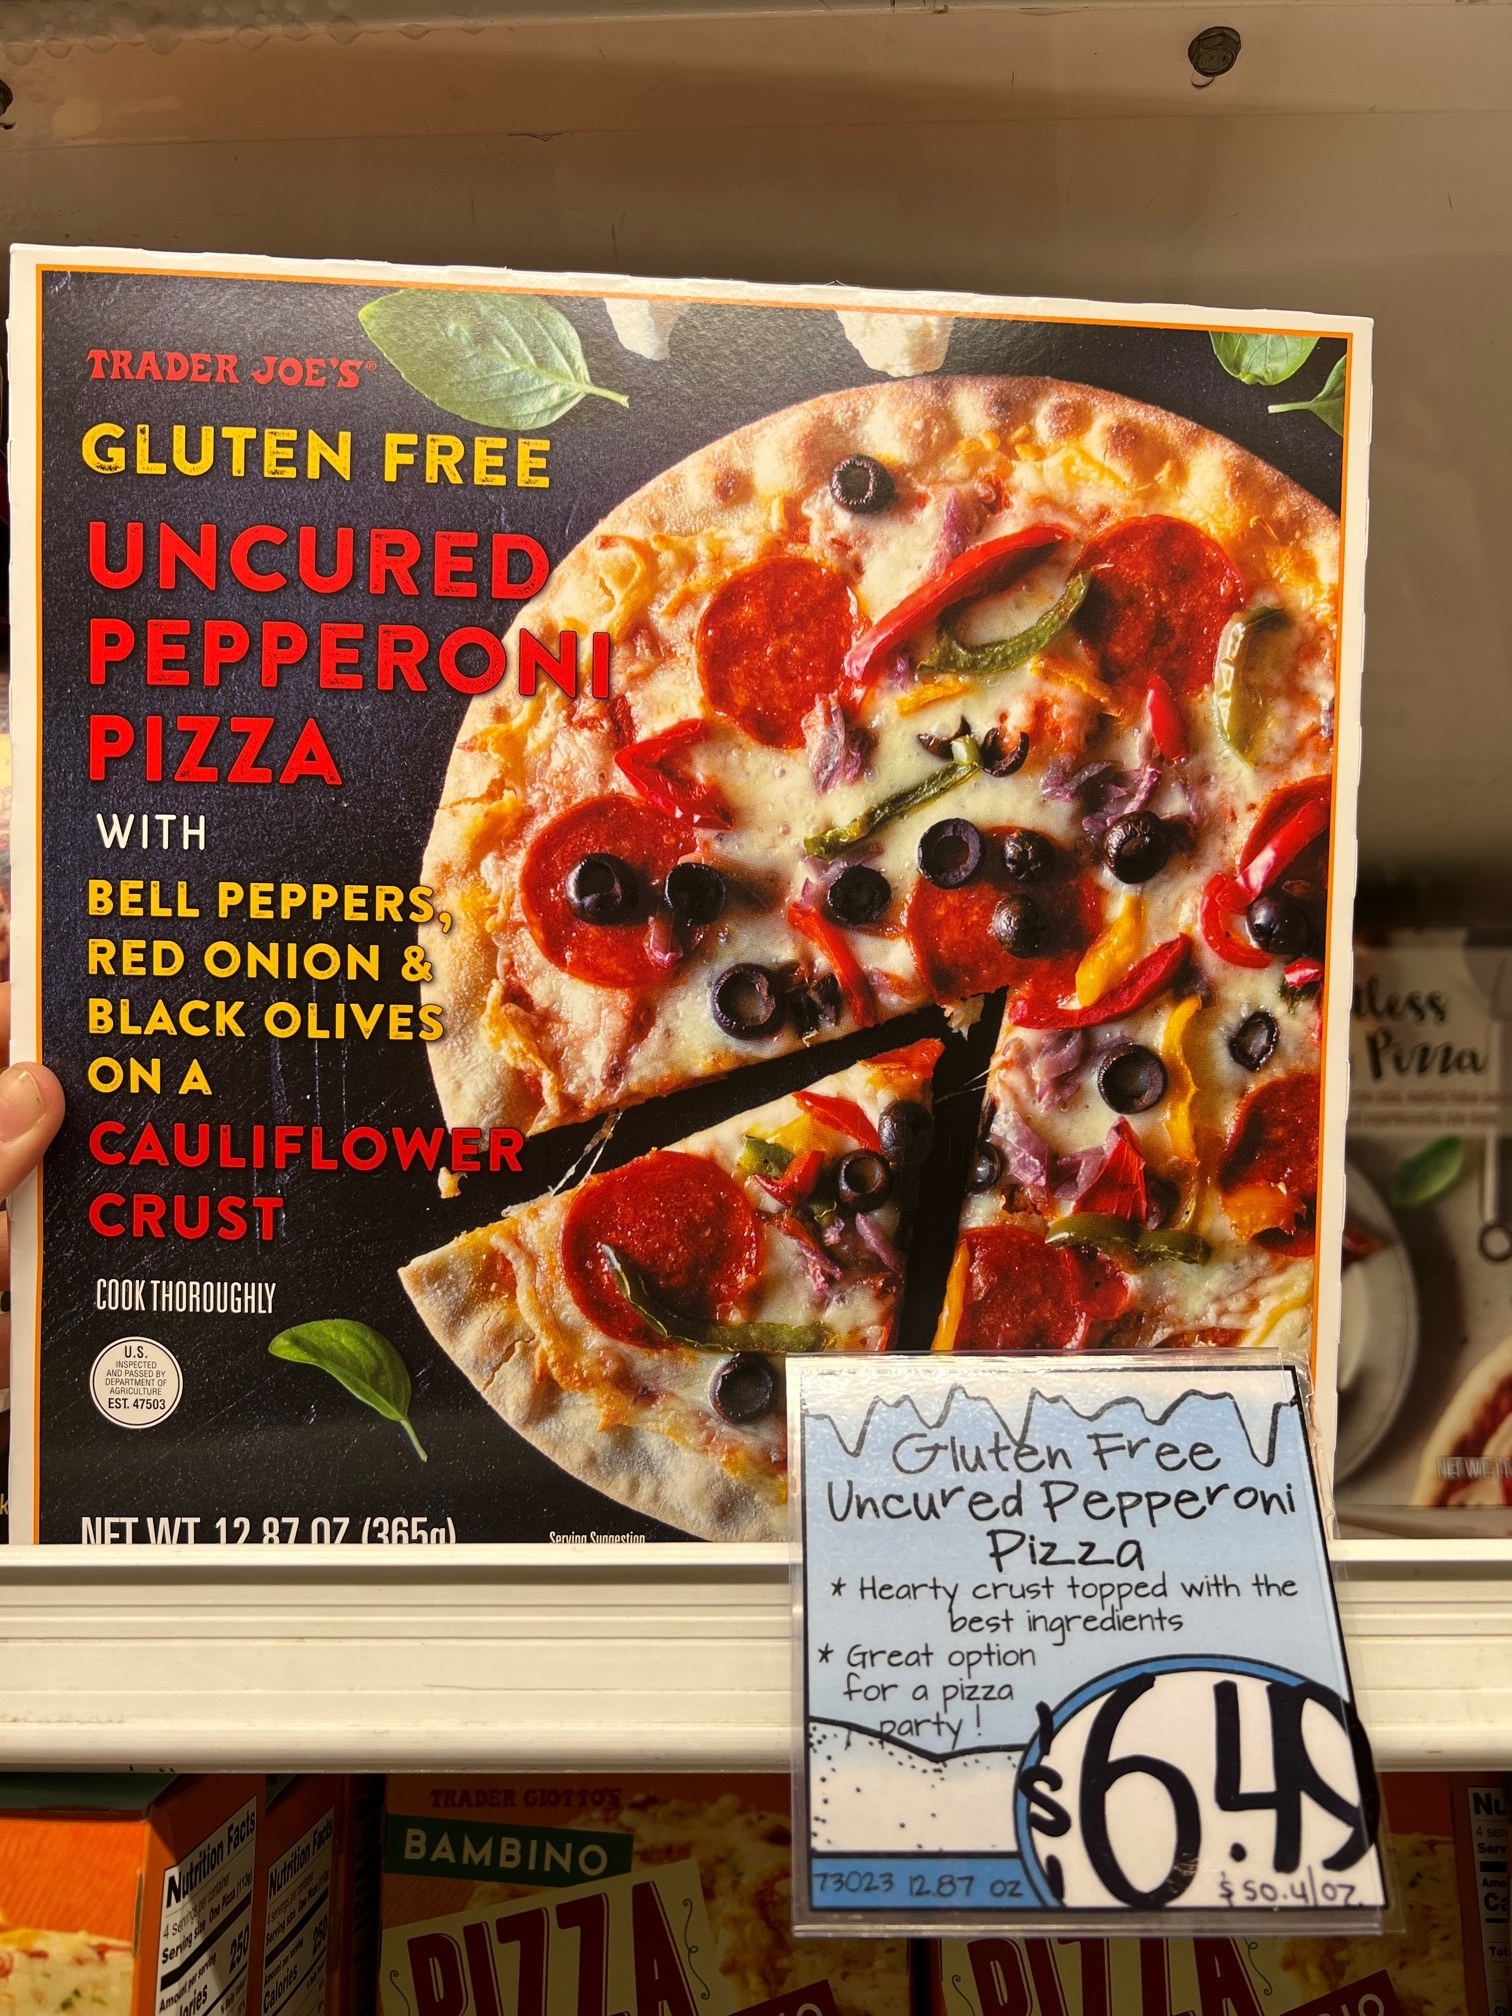 A box of Gluten-Free Uncured Pepperoni Pizza